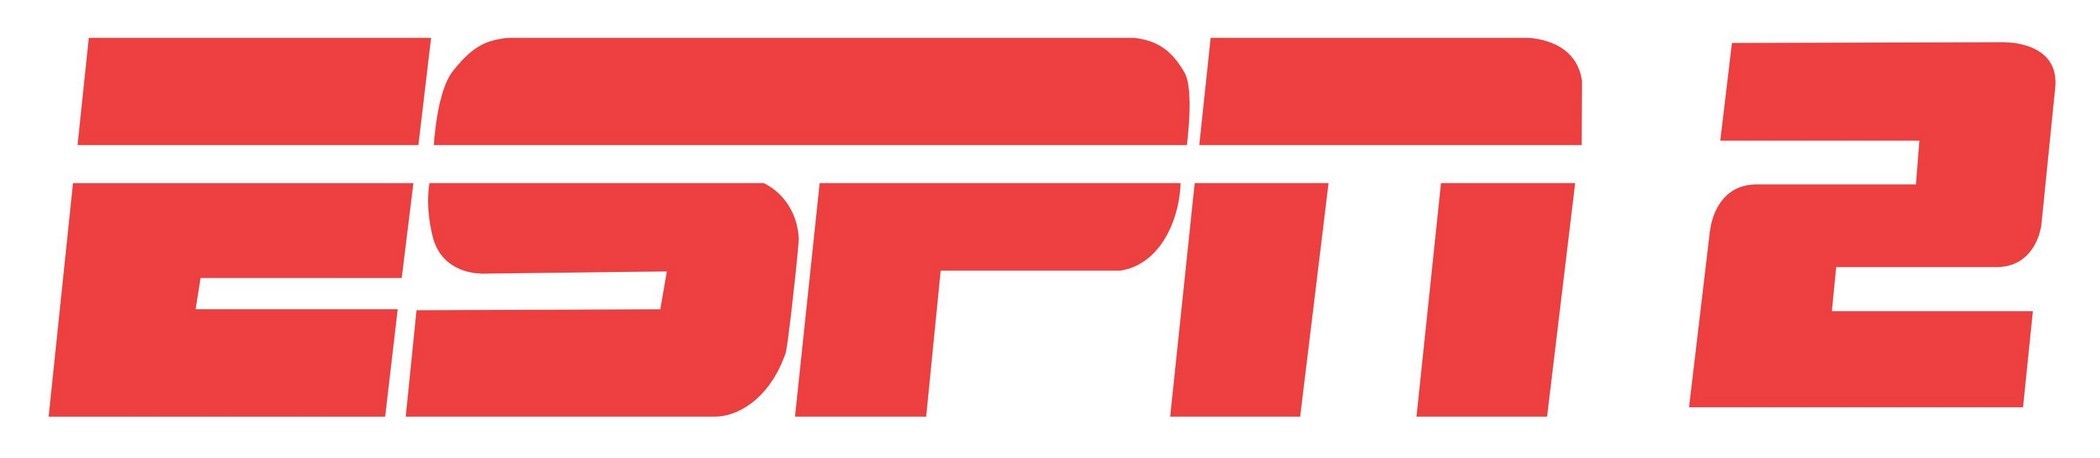 ESPN2 Logo png